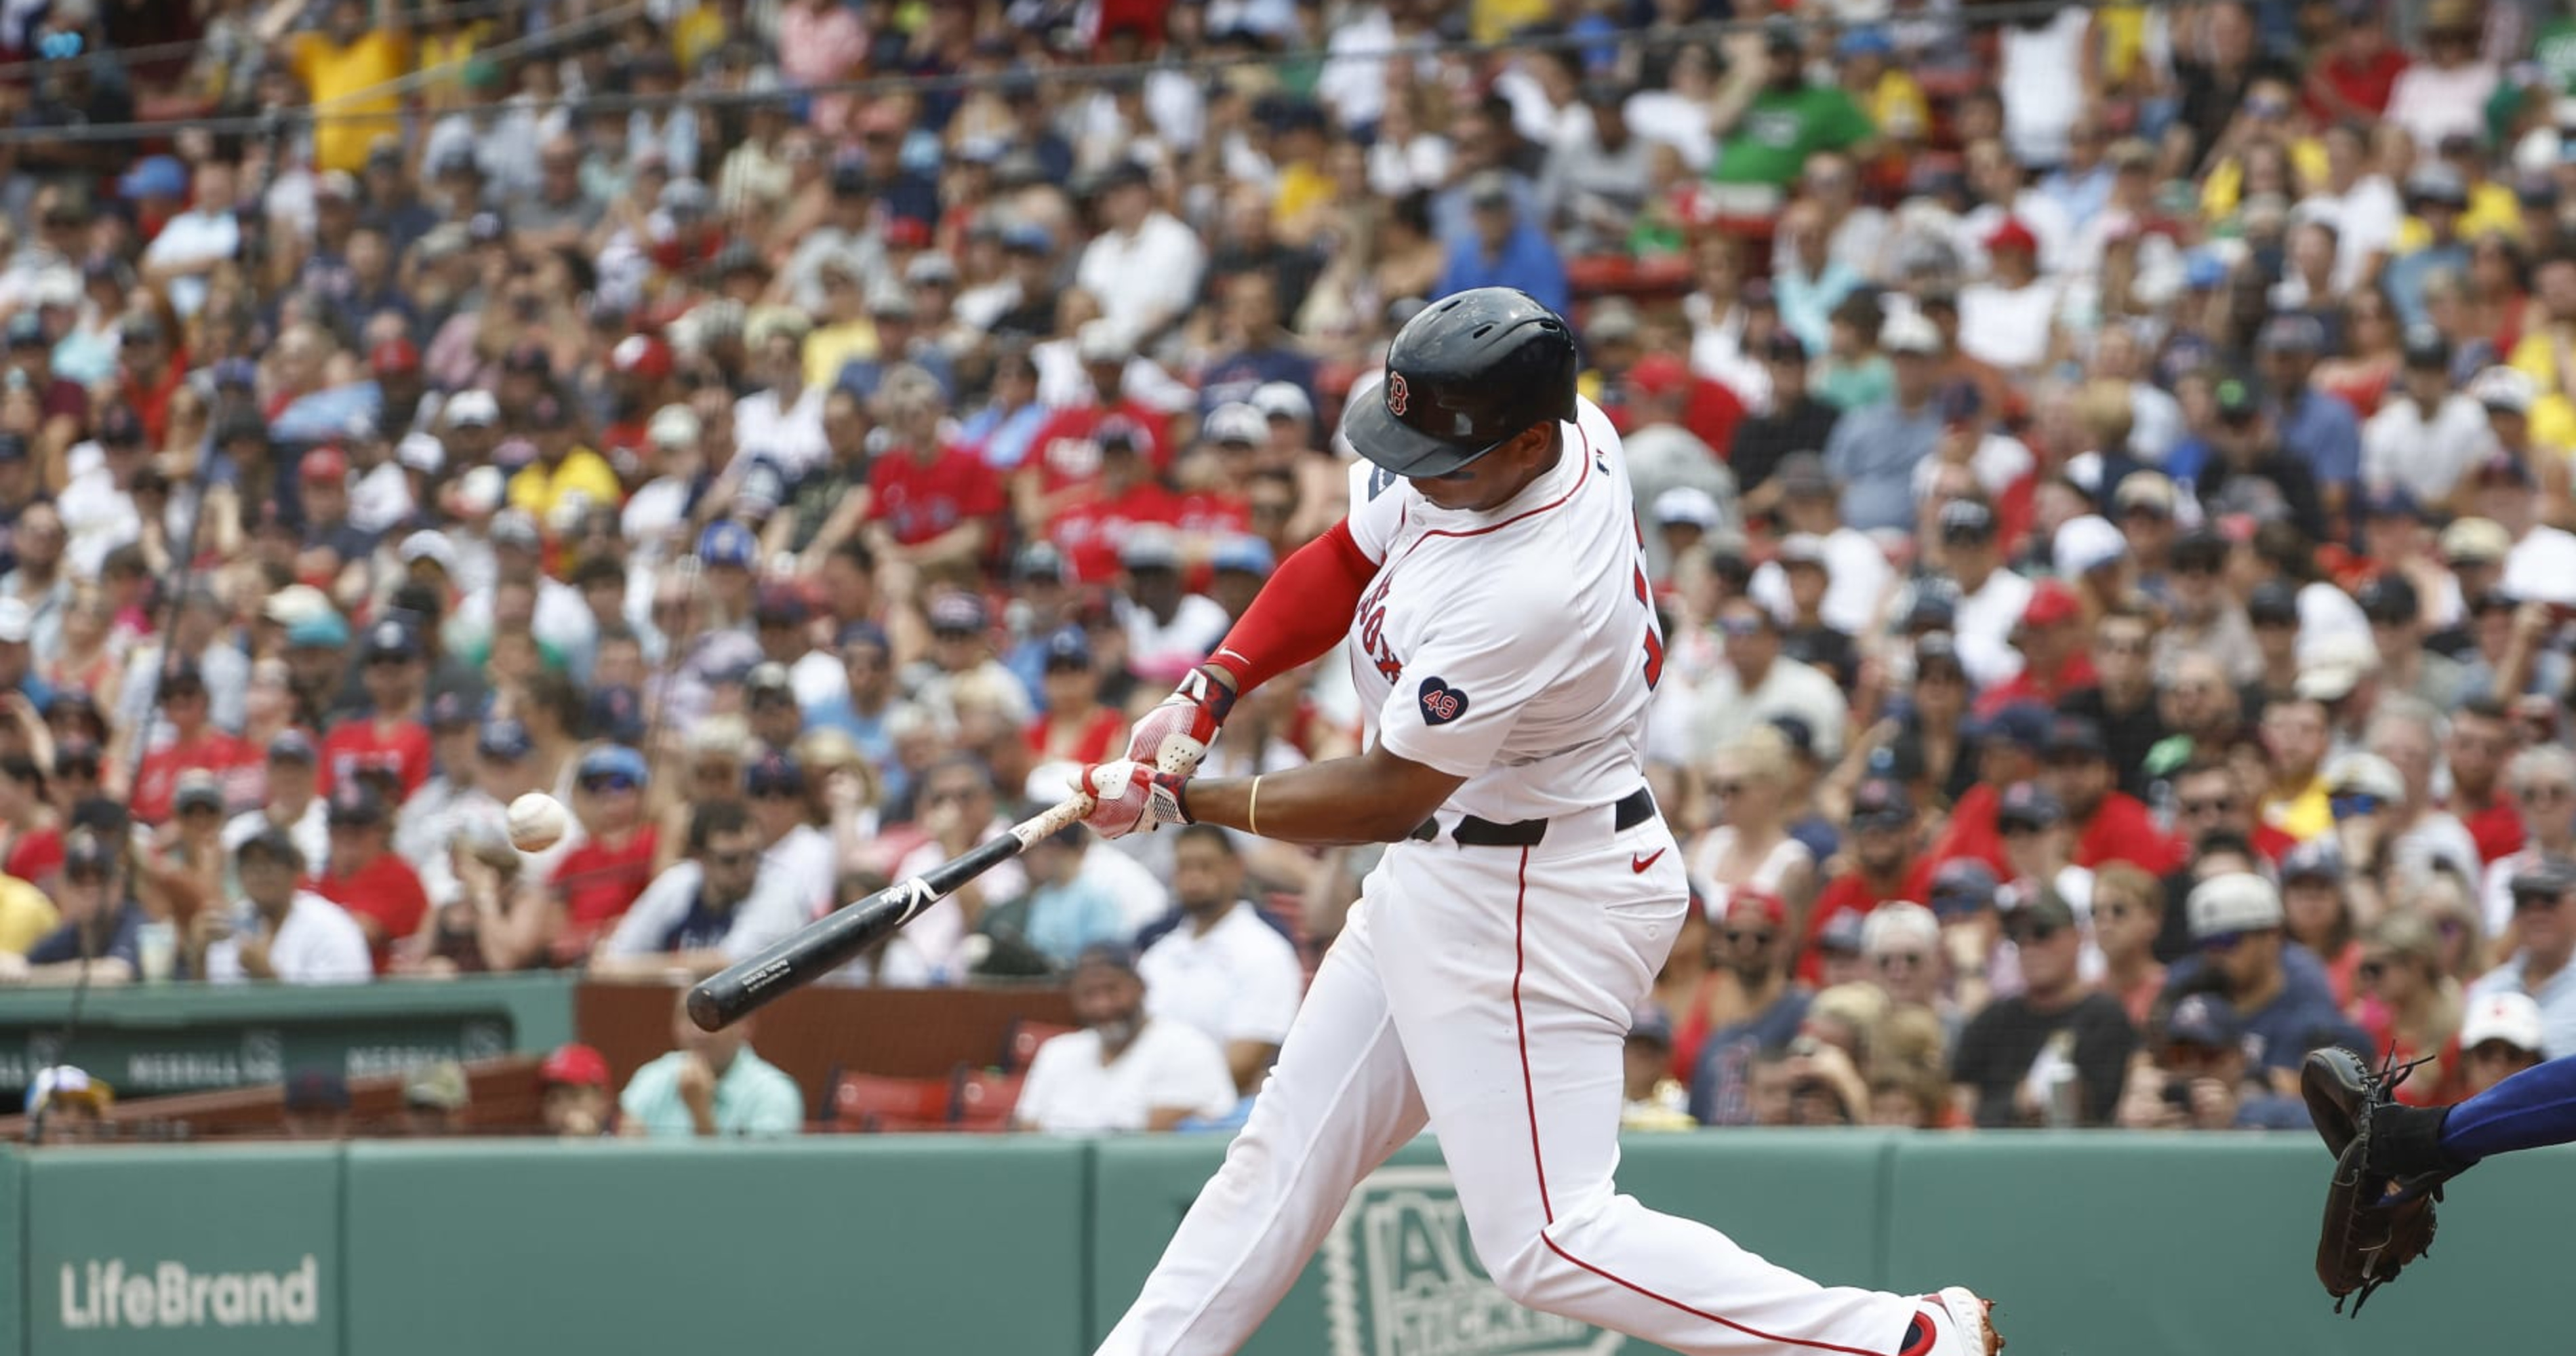 Photo: Rafael Devers' Home Run vs. Royals Breaks Seat at Red Sox's Fenway Park